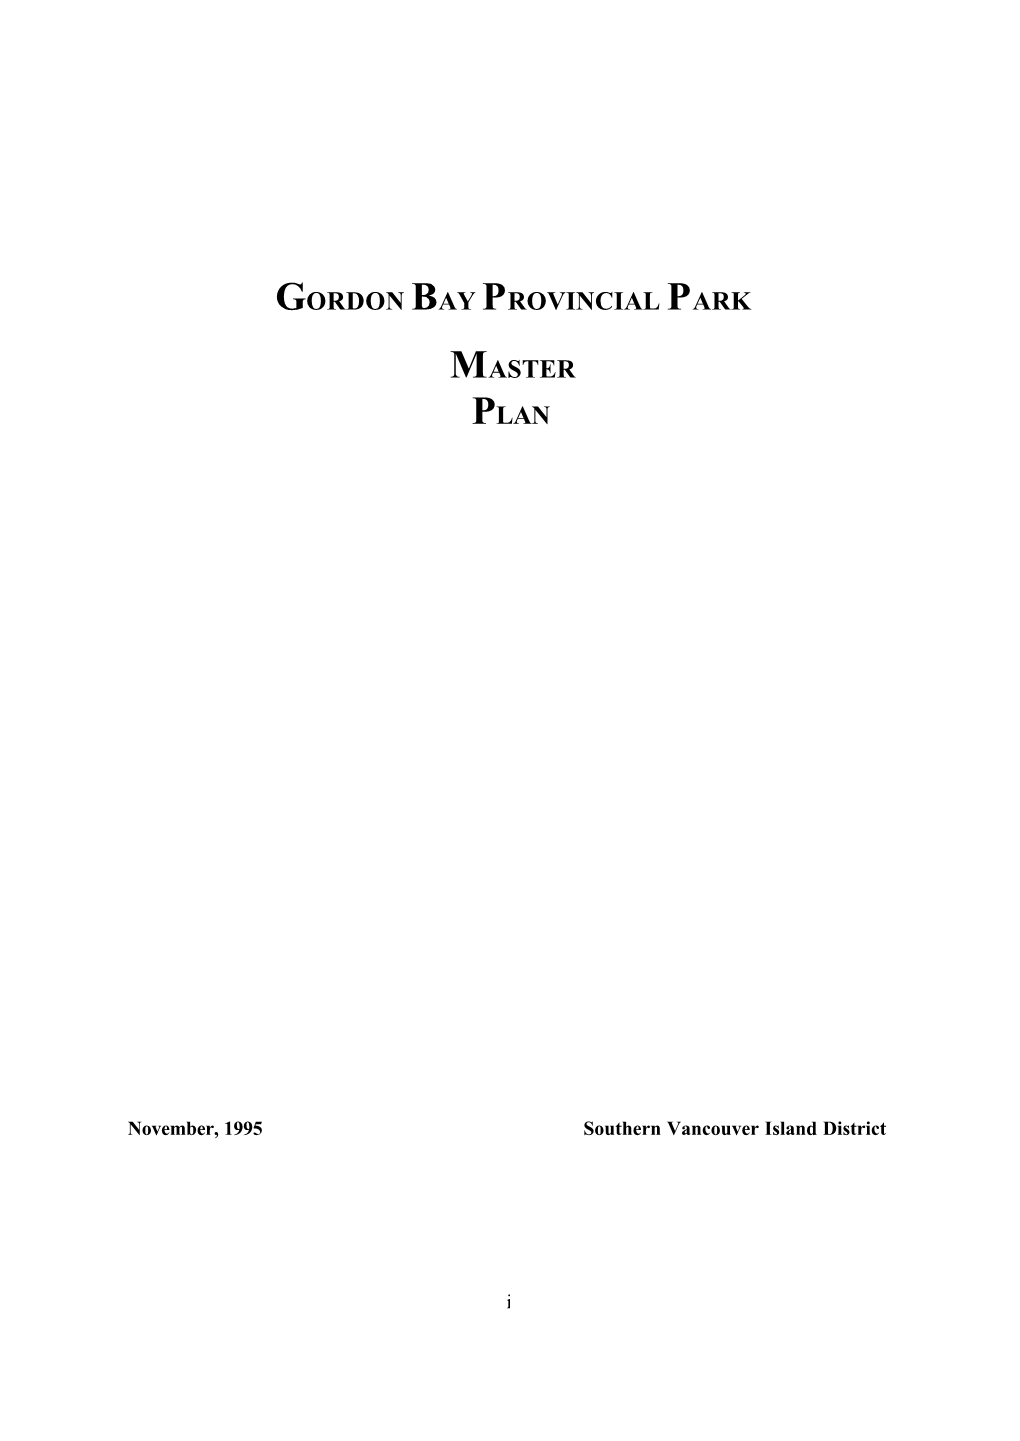 Gordon Bay Provincial Park Master Plan